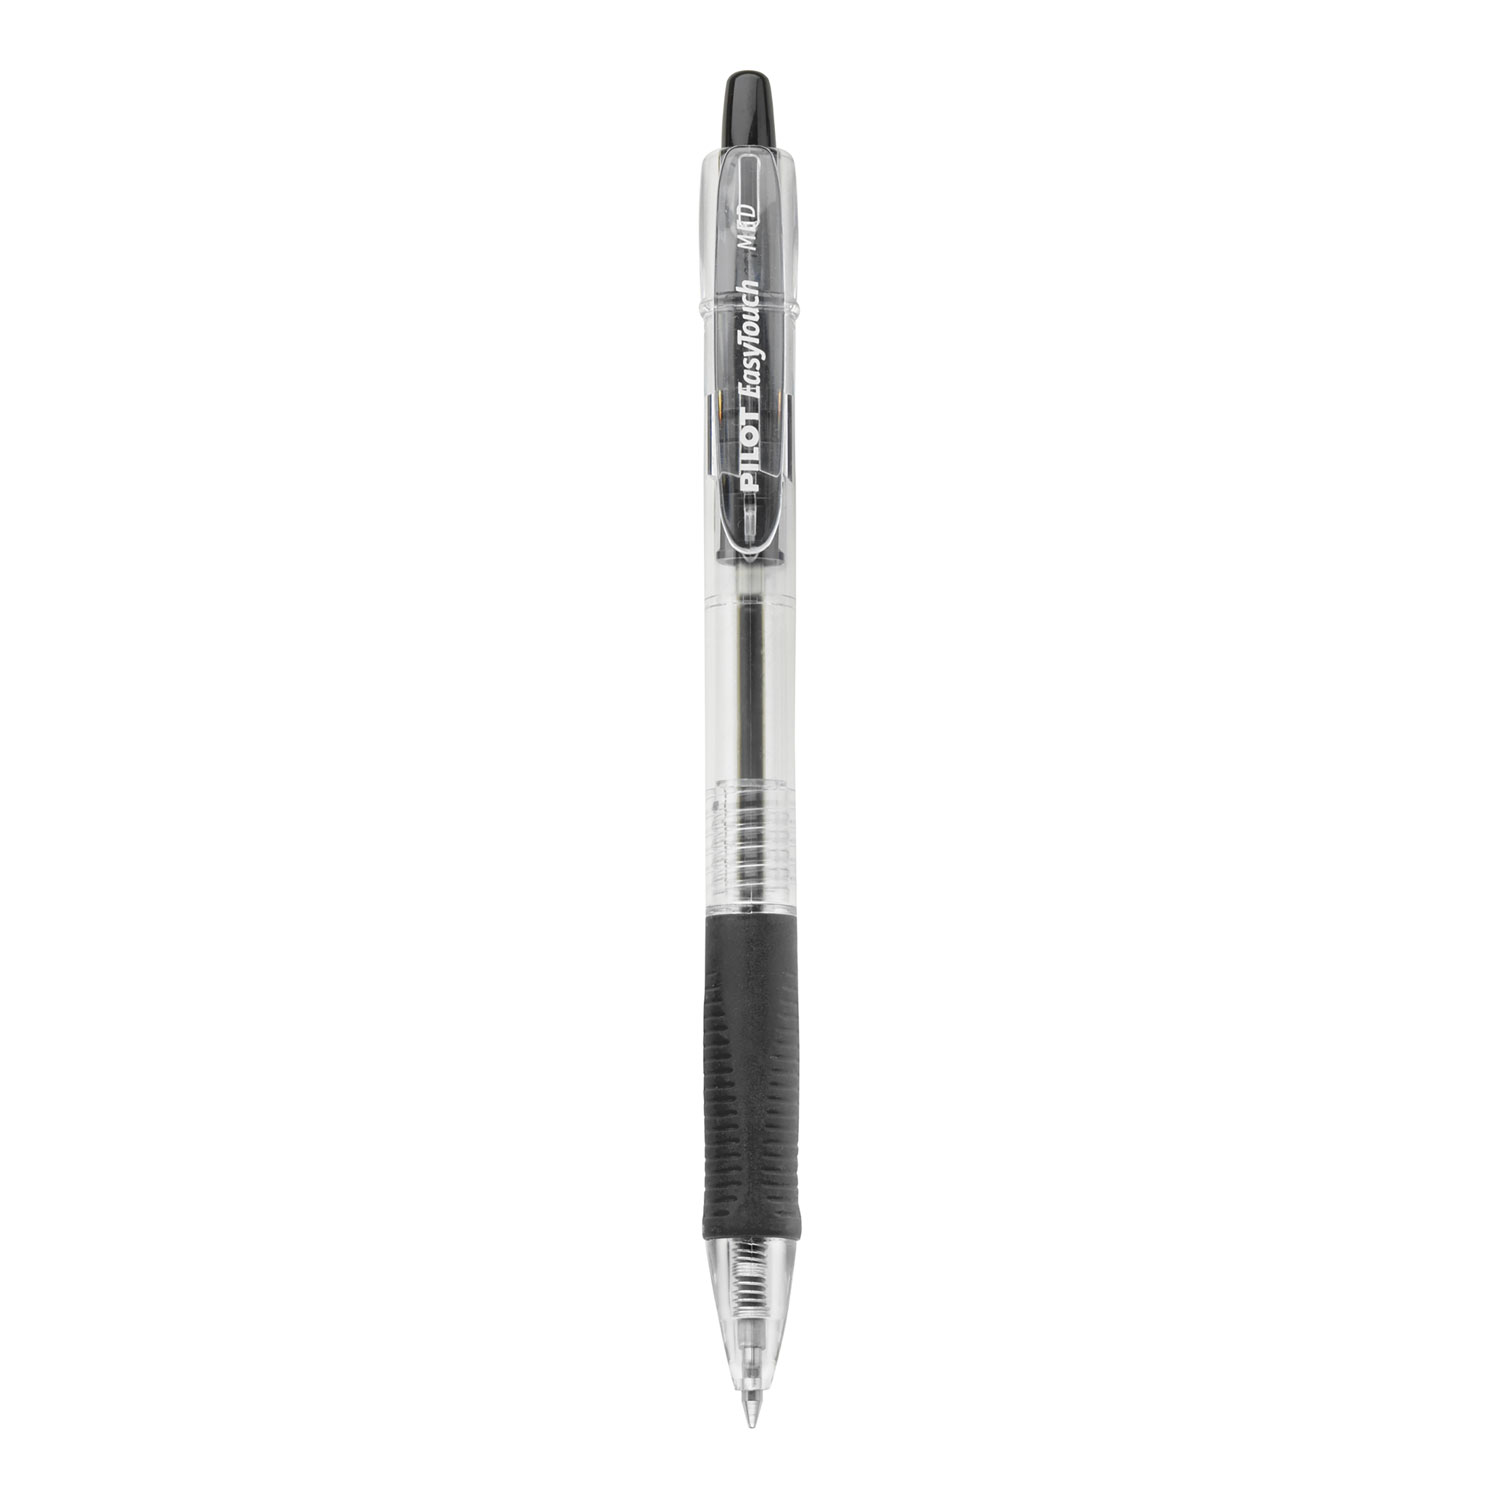 Pilot EasyTouch Refillable & Retractable Ballpoint Pens, Medium Point, Black Ink, 12-Pack (32220)